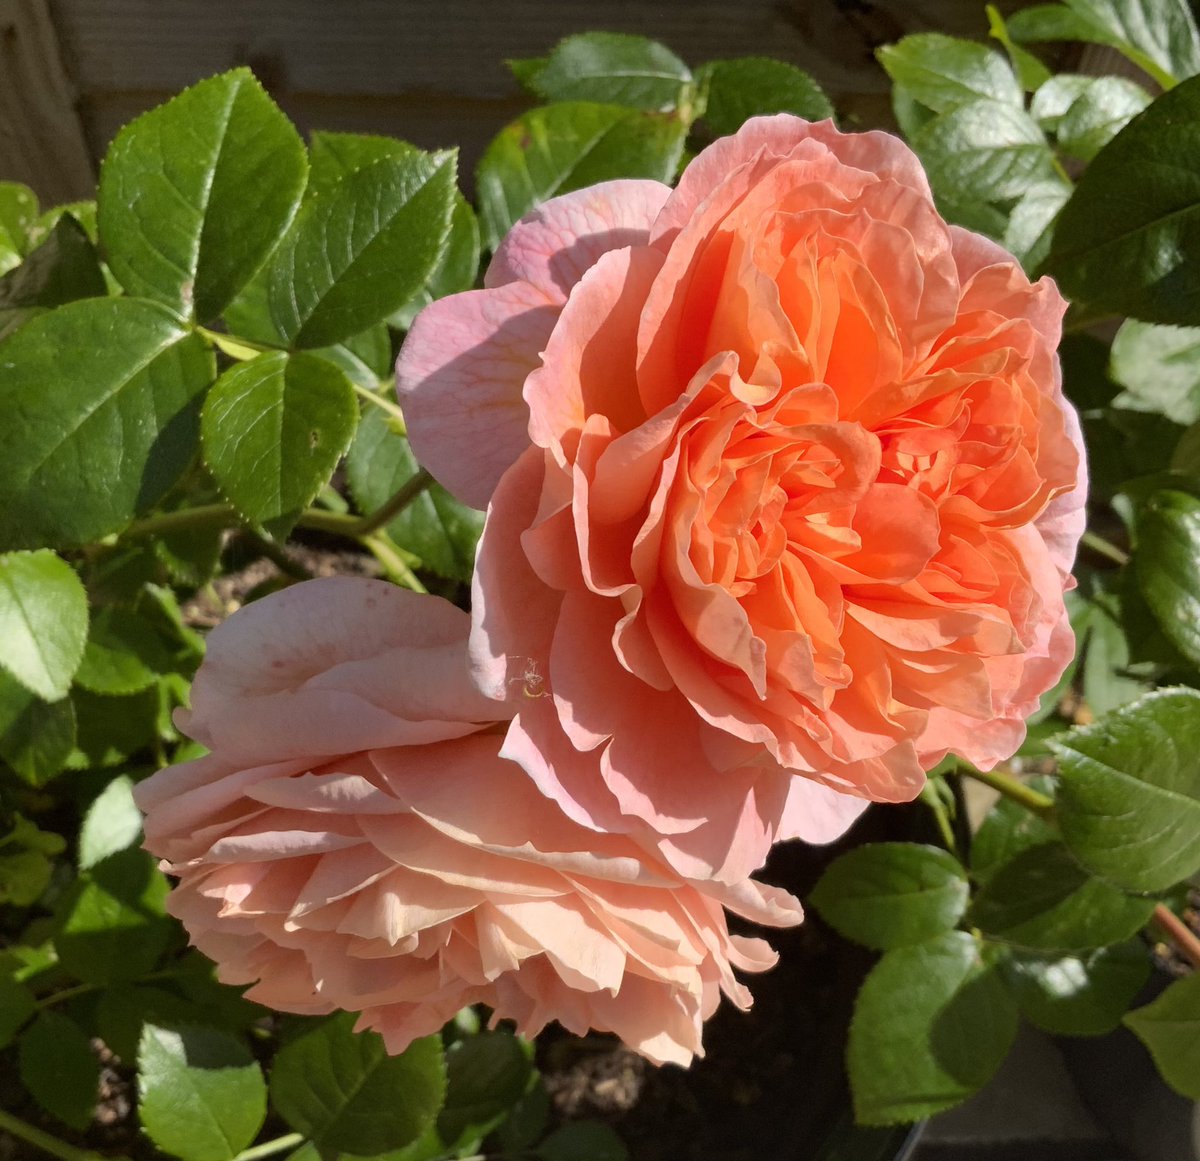 Sending warm wishes and sunshine for the first day of meteorological summer. #roses #GardeningTwitter #GardeningX #itsawonderfulliferose #meteorologicalsummer @loujnicholls @kgimson